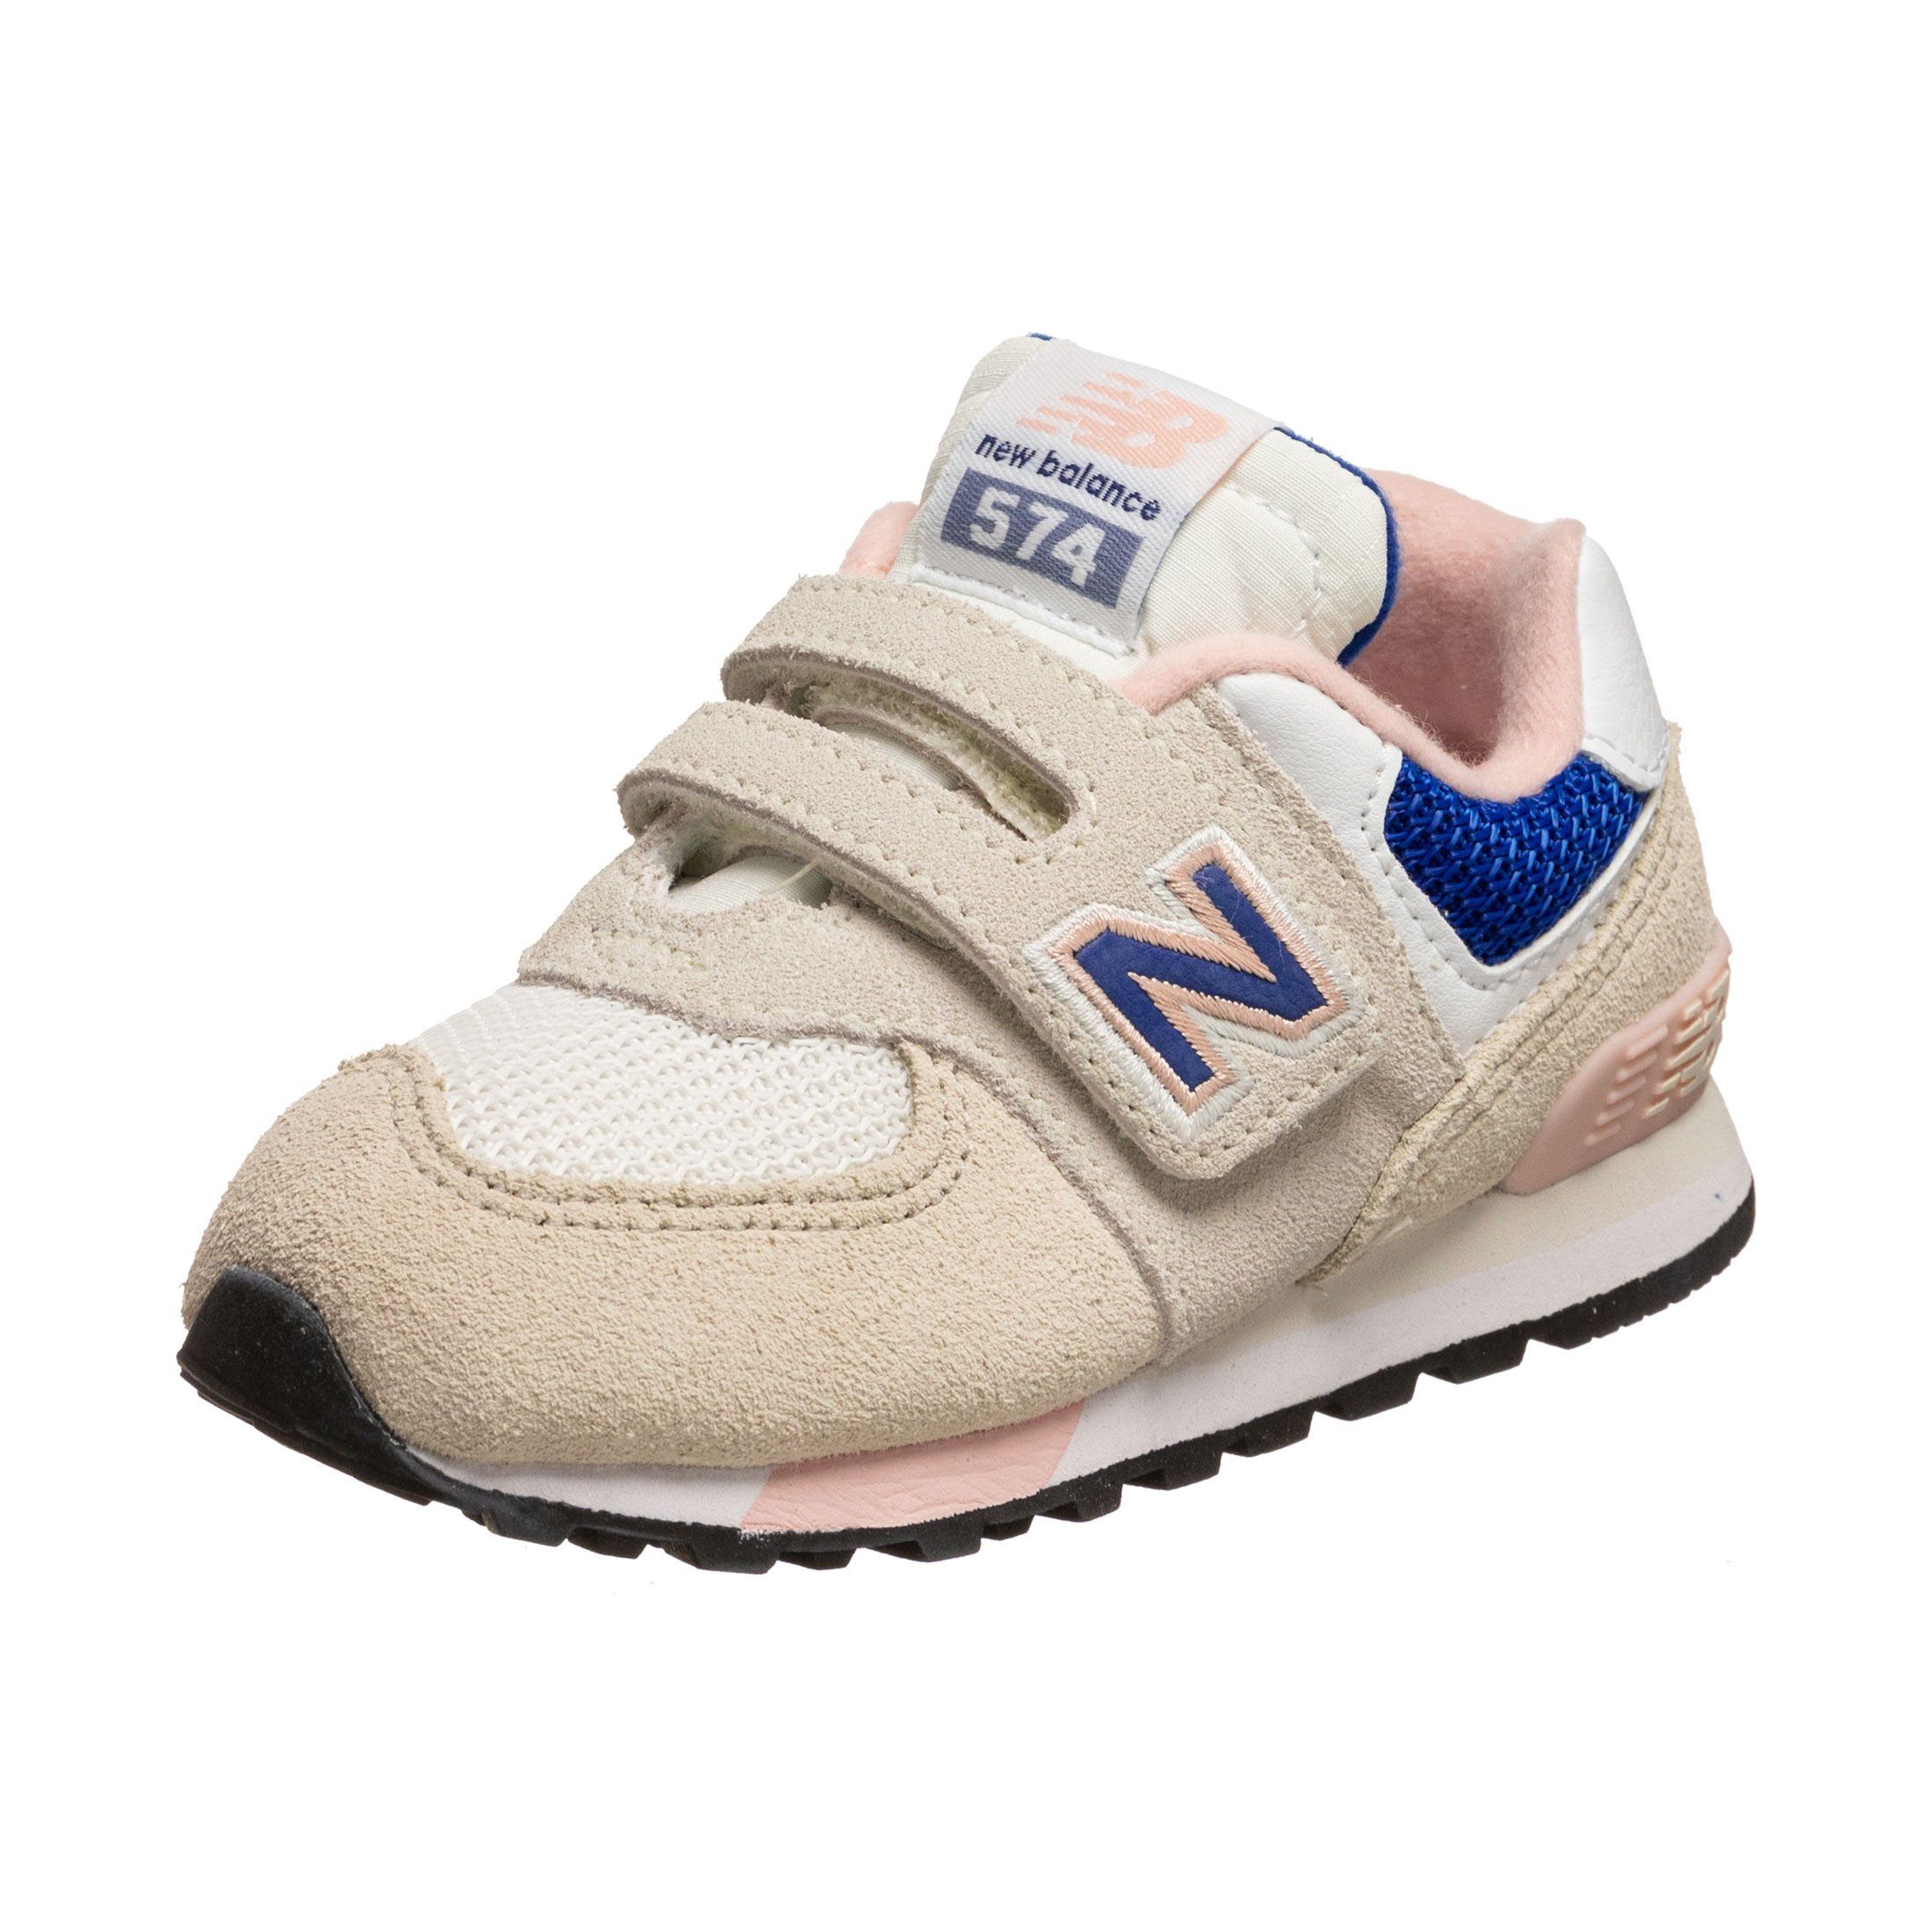 New Balance 574 Sneaker Kinder Sneaker beige